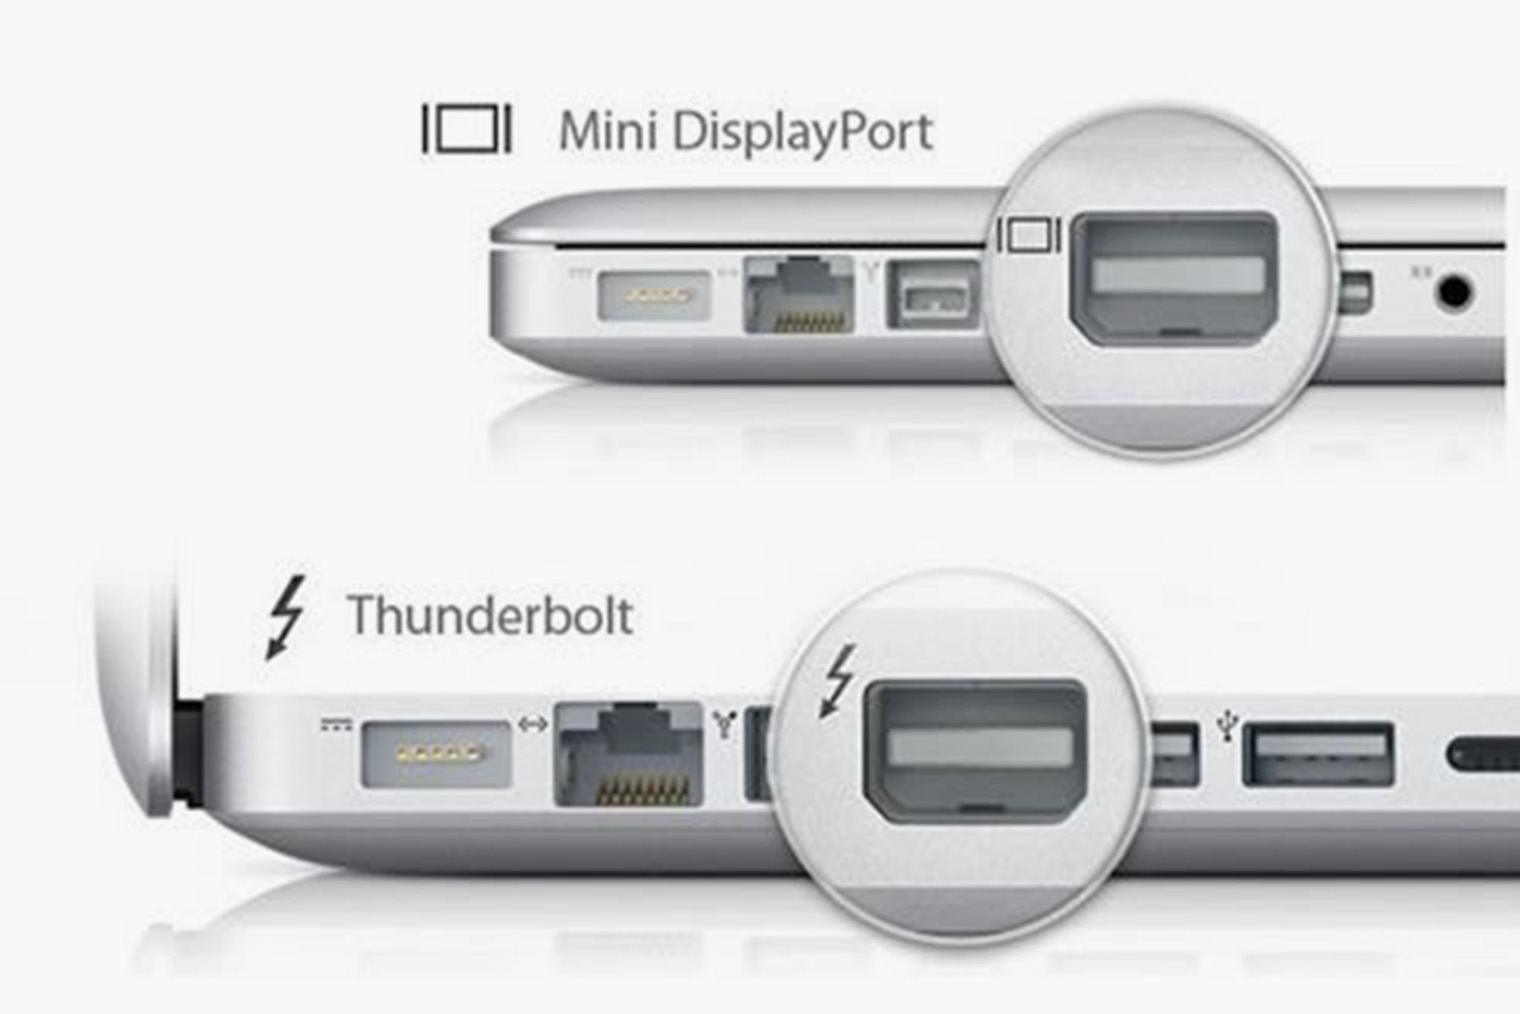 Mini DisplayPort и Thunderbolt различаются маркировкой на корпусе